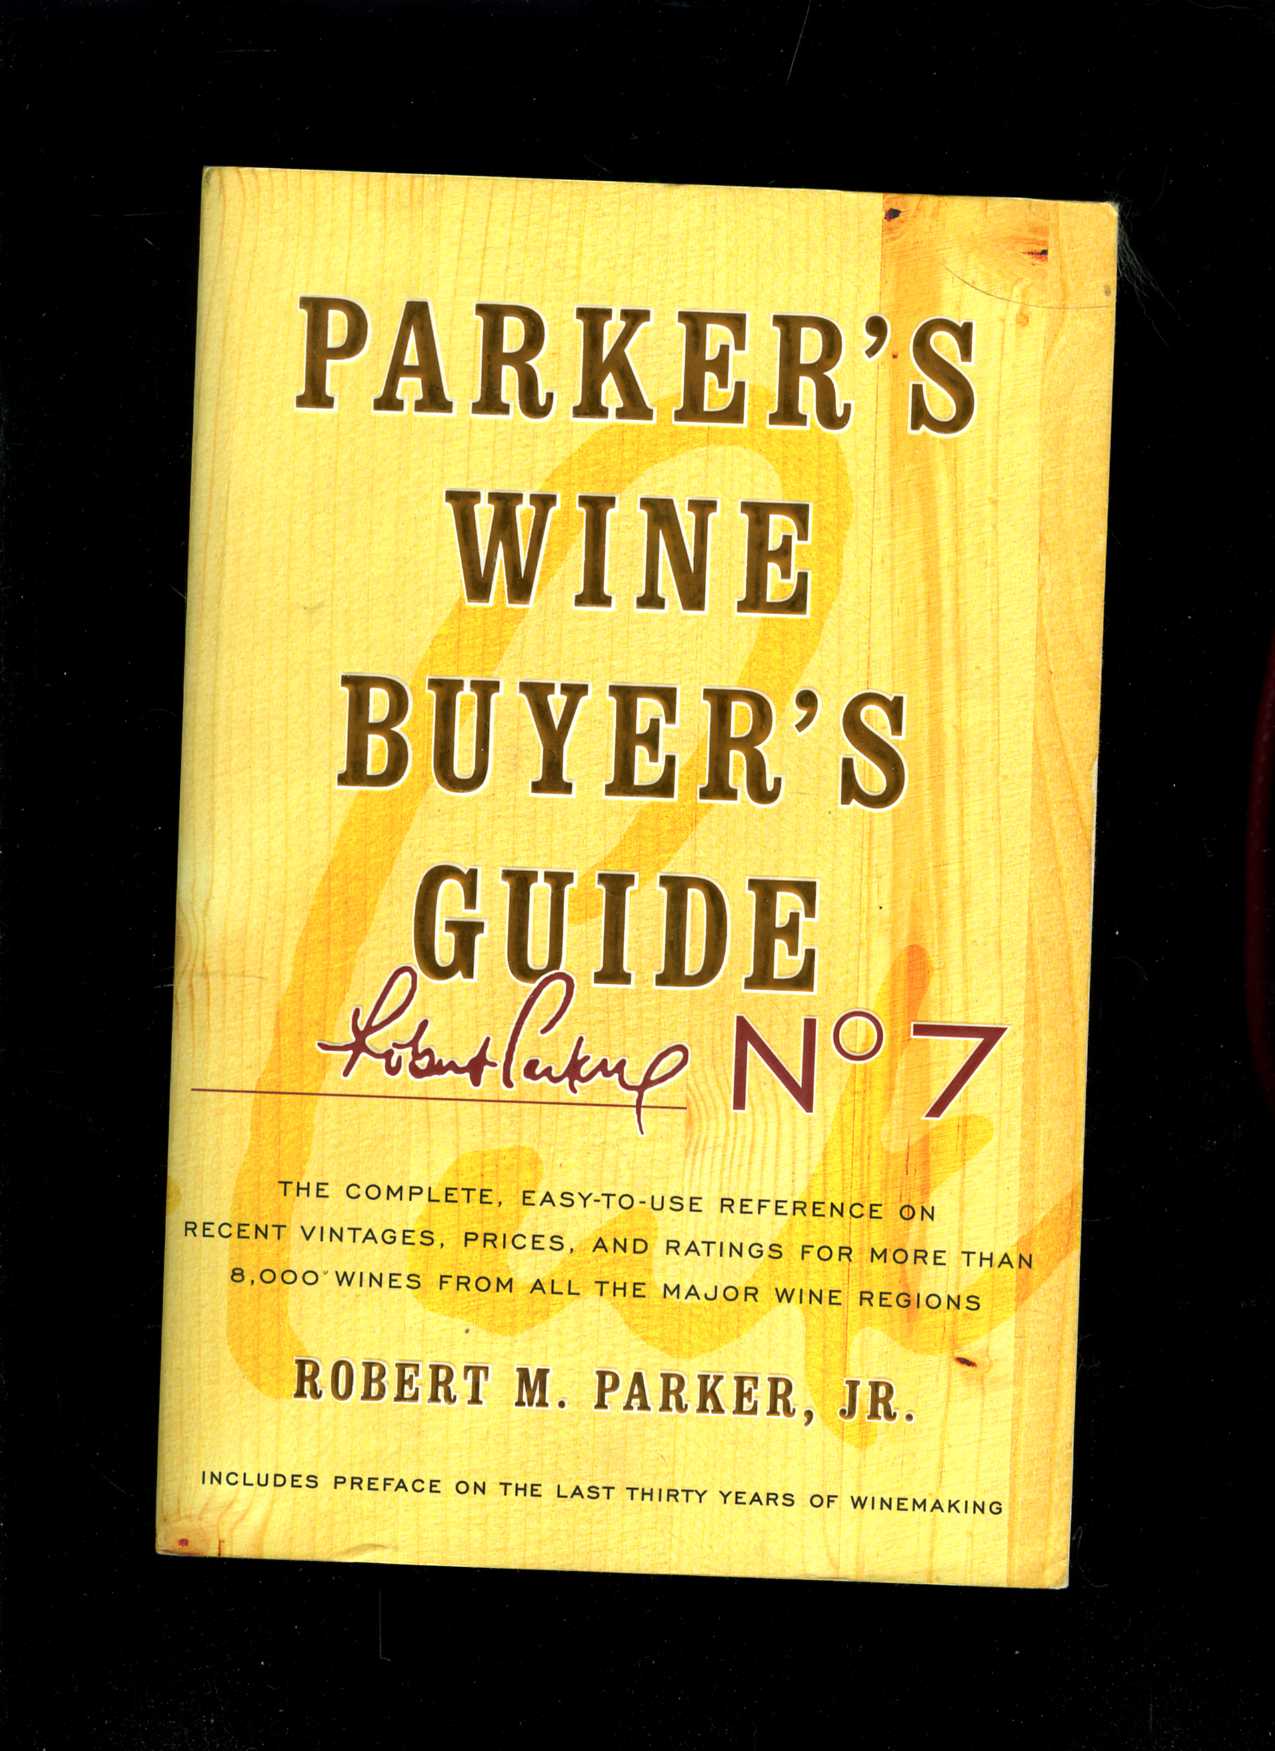 Parker's Wine Buyer's Guide